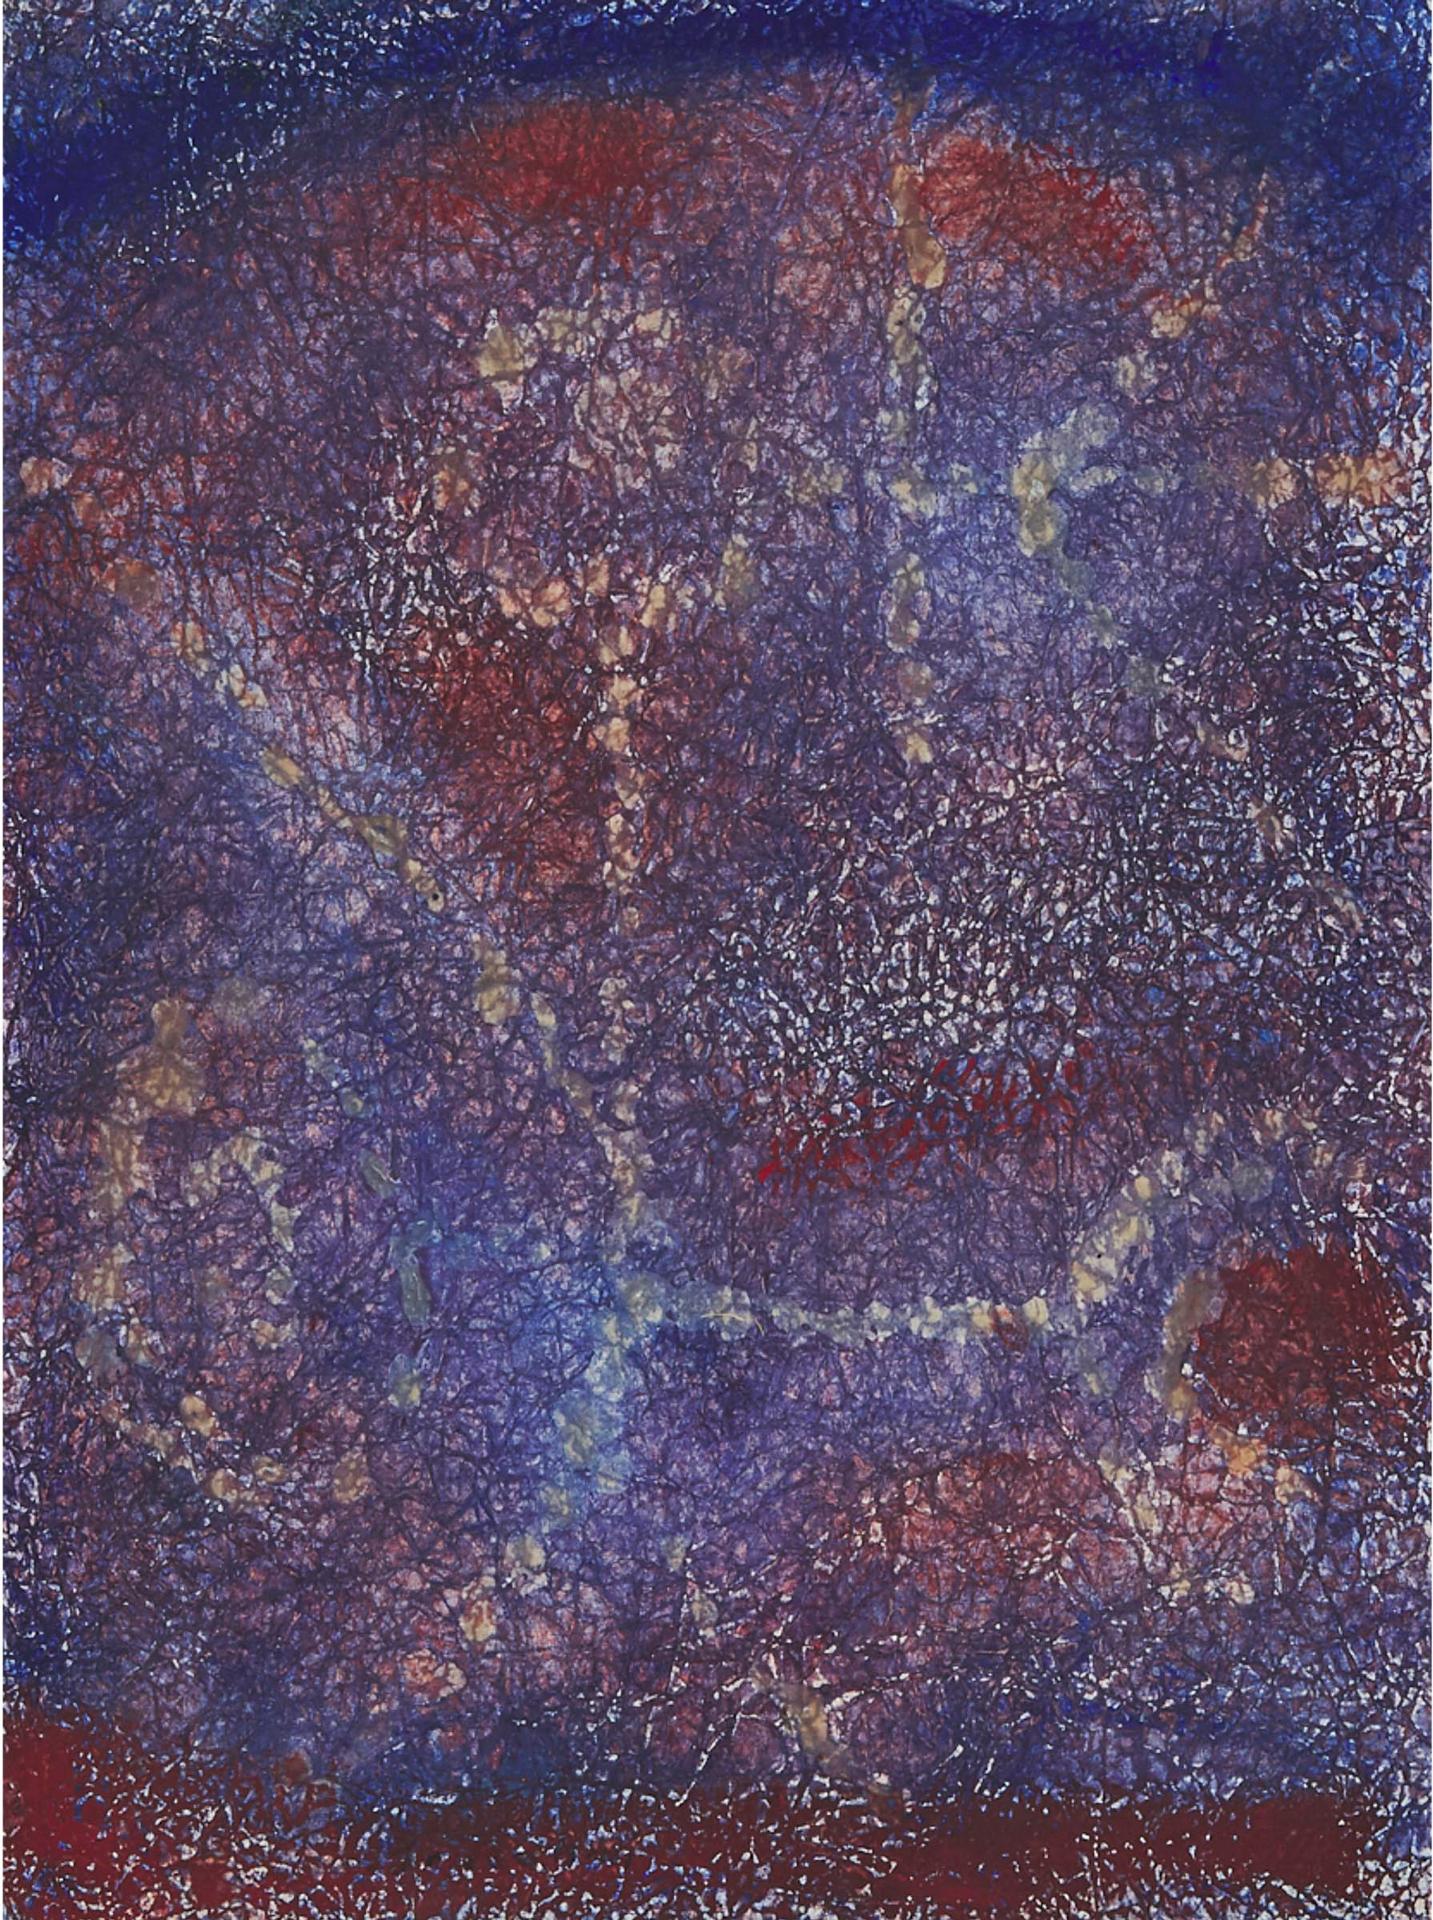 Bedri Rahmi Eyüboğlu (1911-1975) - Untitled (Blue/Red Abstract), 1960